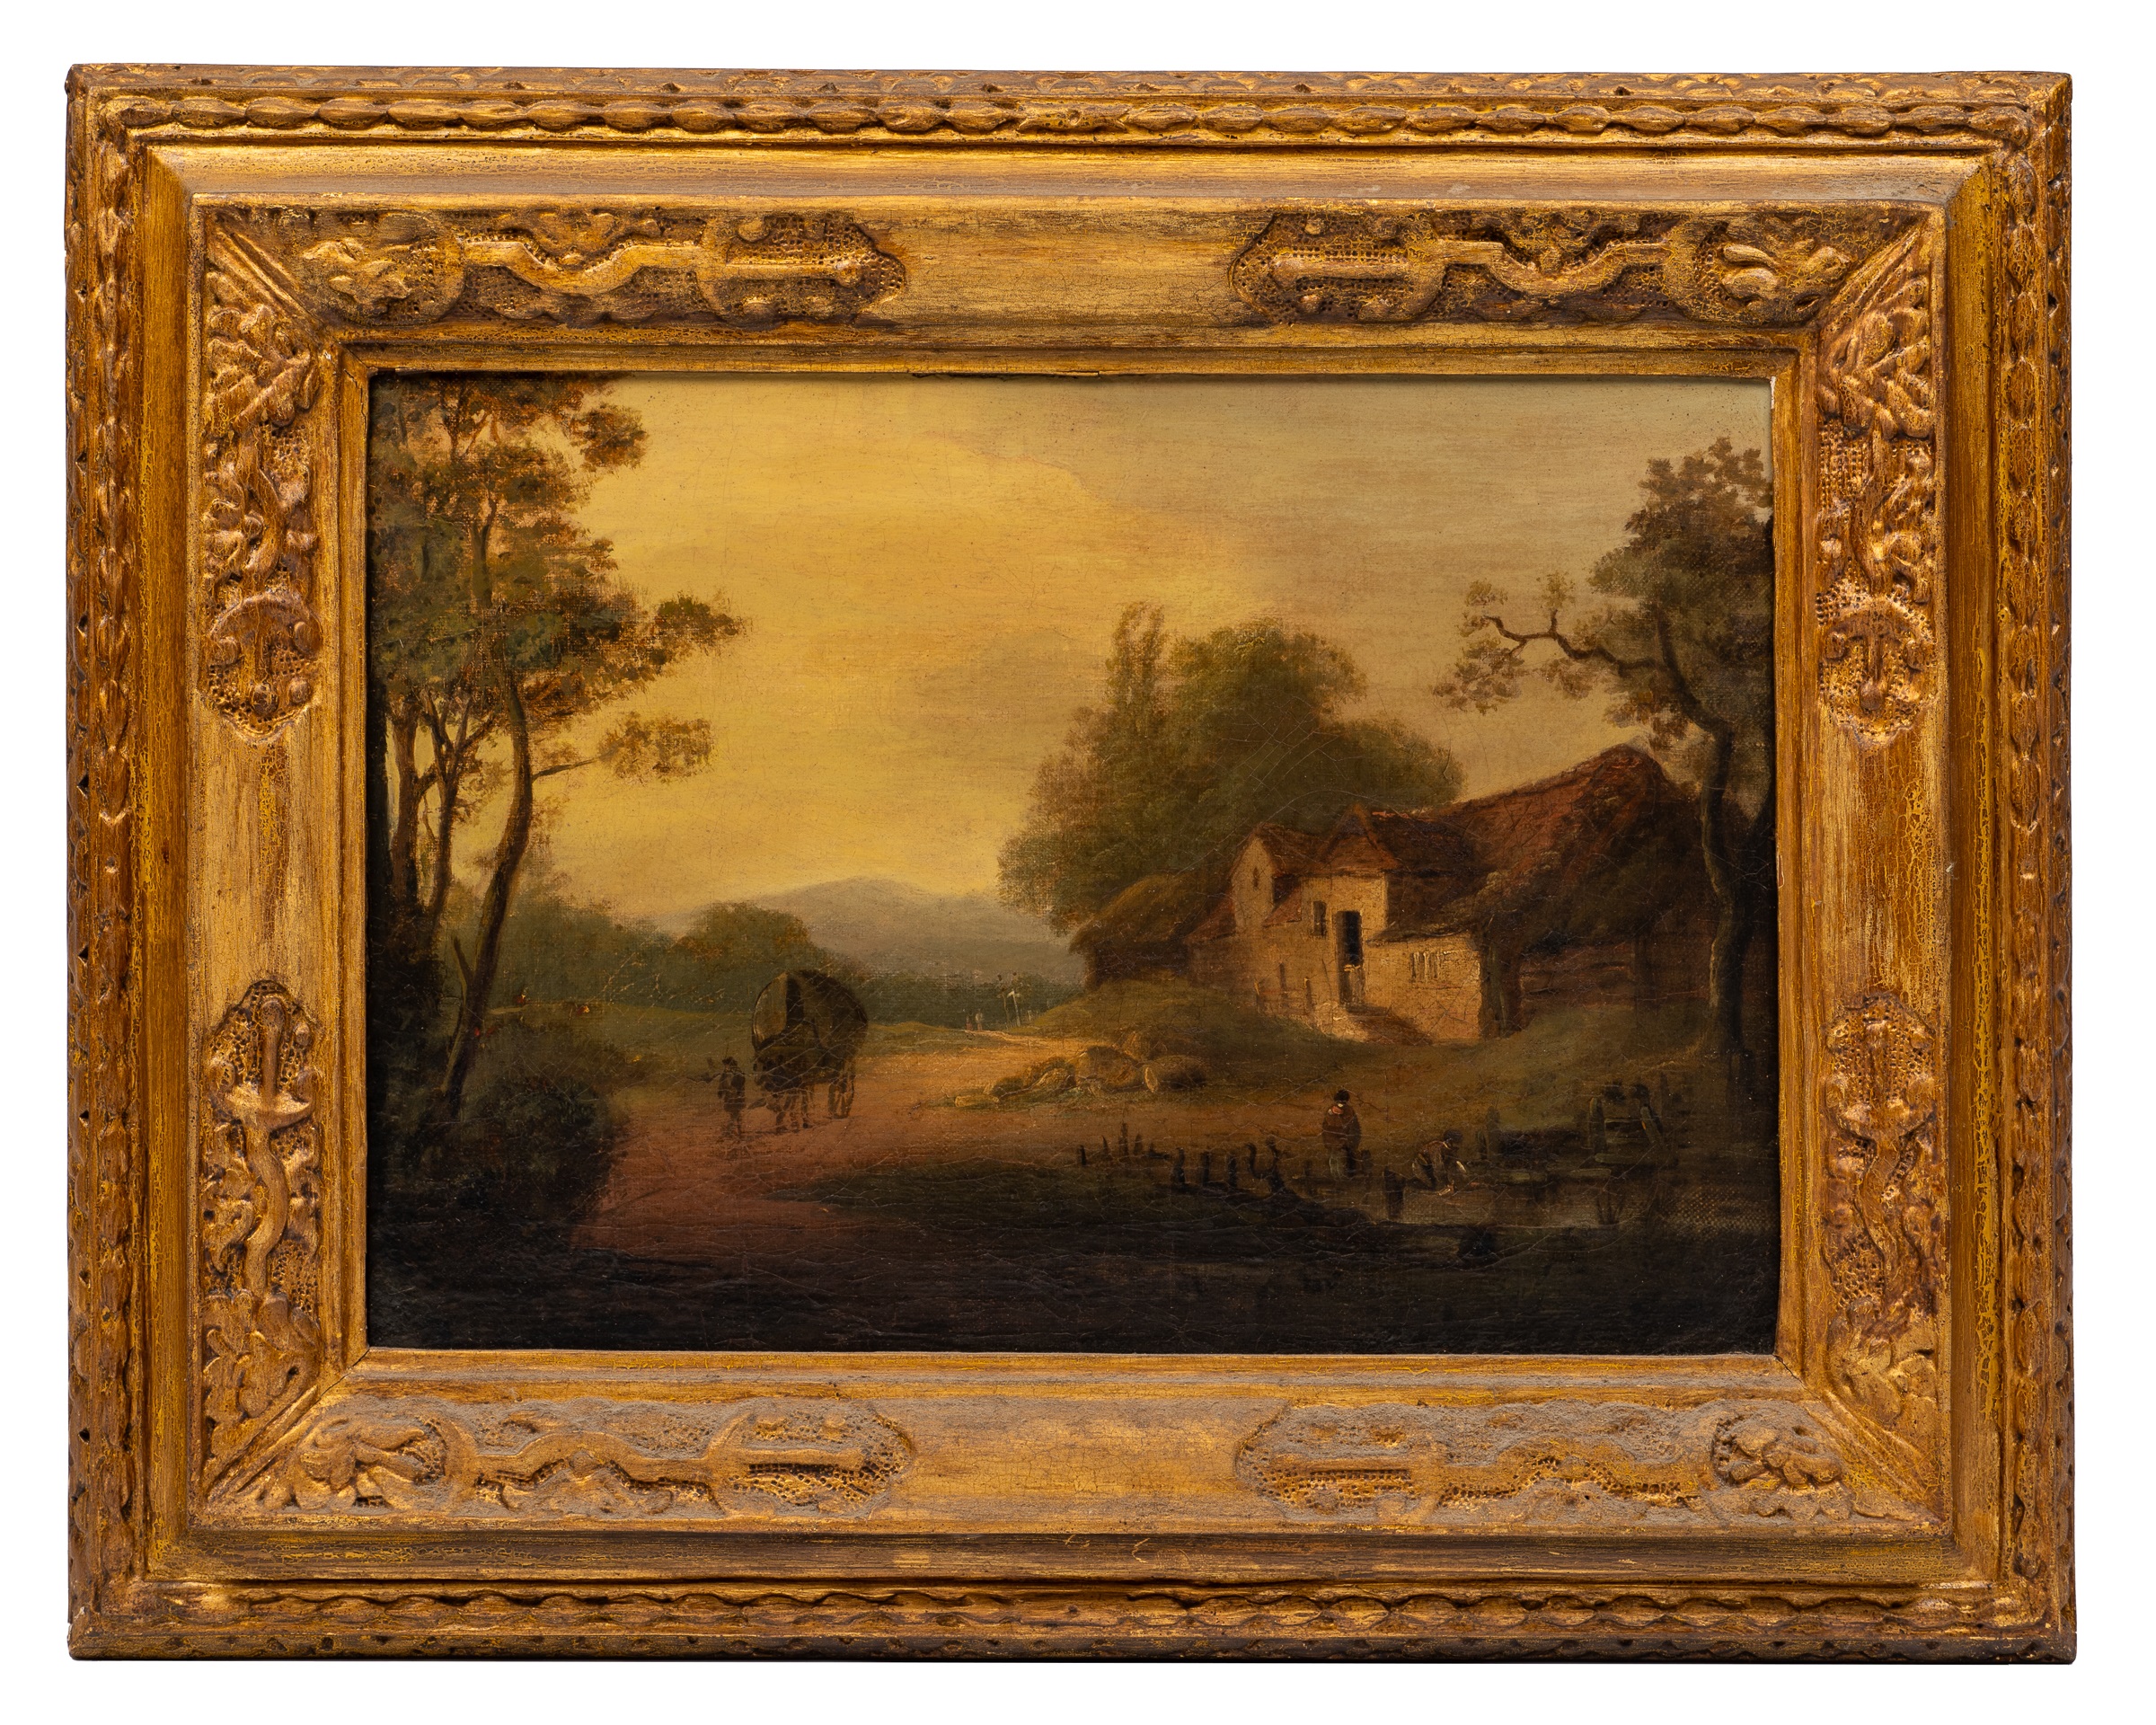 19th century British School, a rural landscape - Image 2 of 3